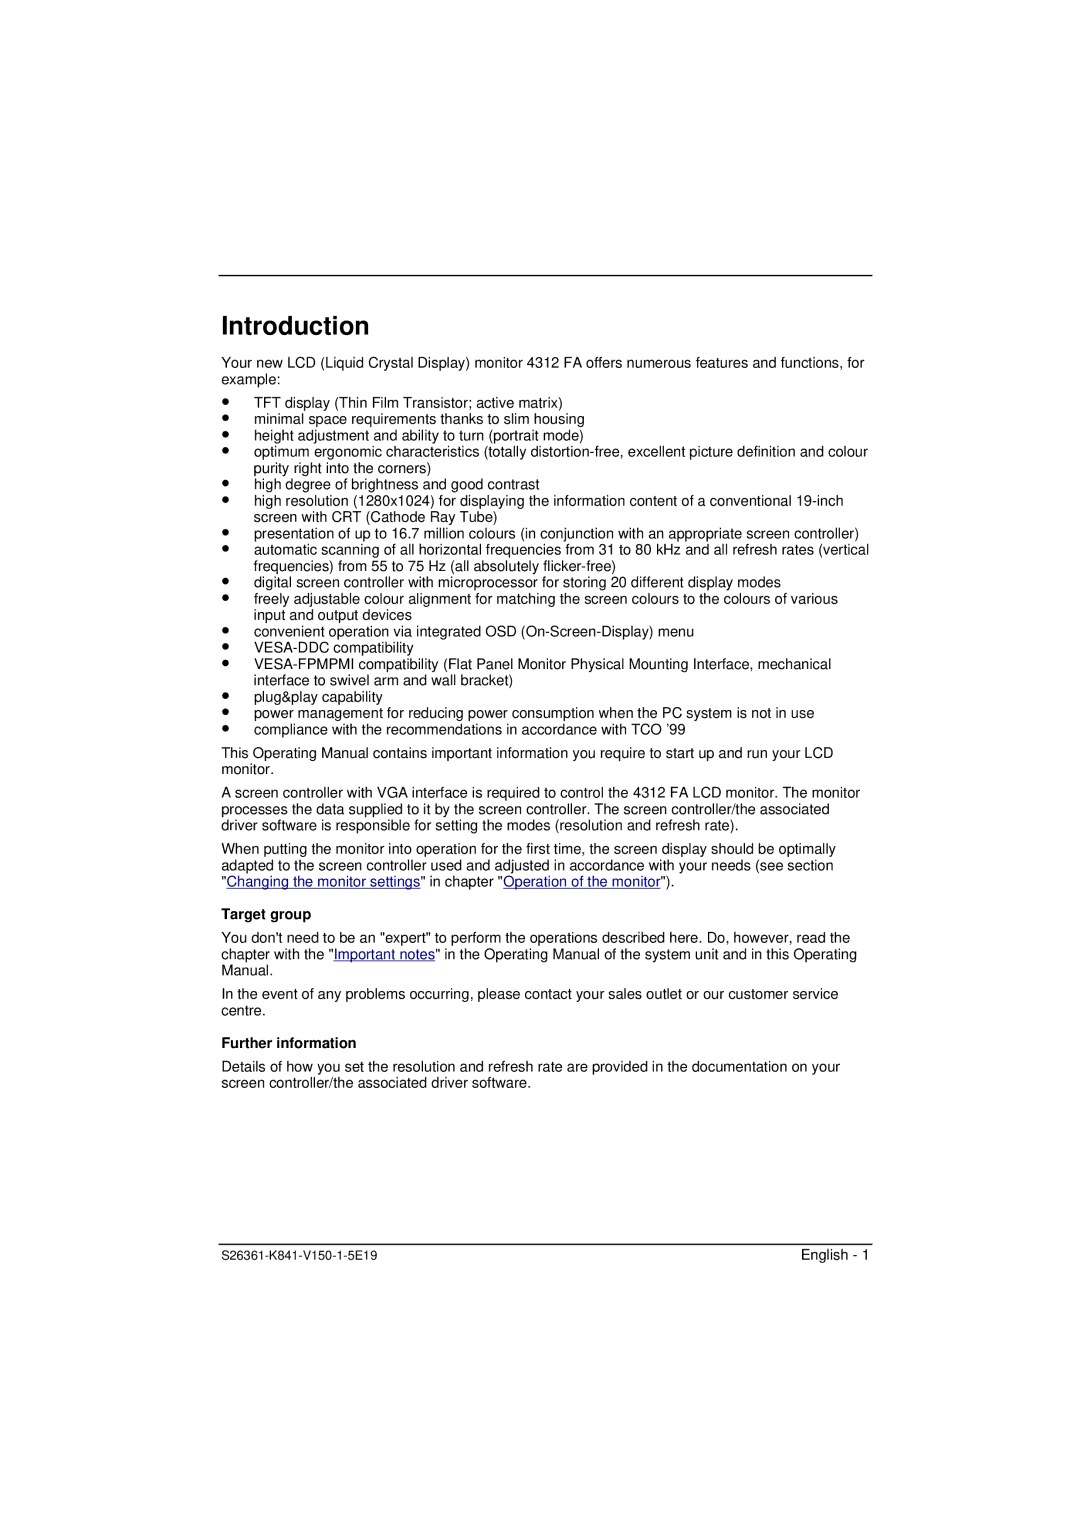 Fujitsu 4312 FA manual Introduction, Target group, Further information 